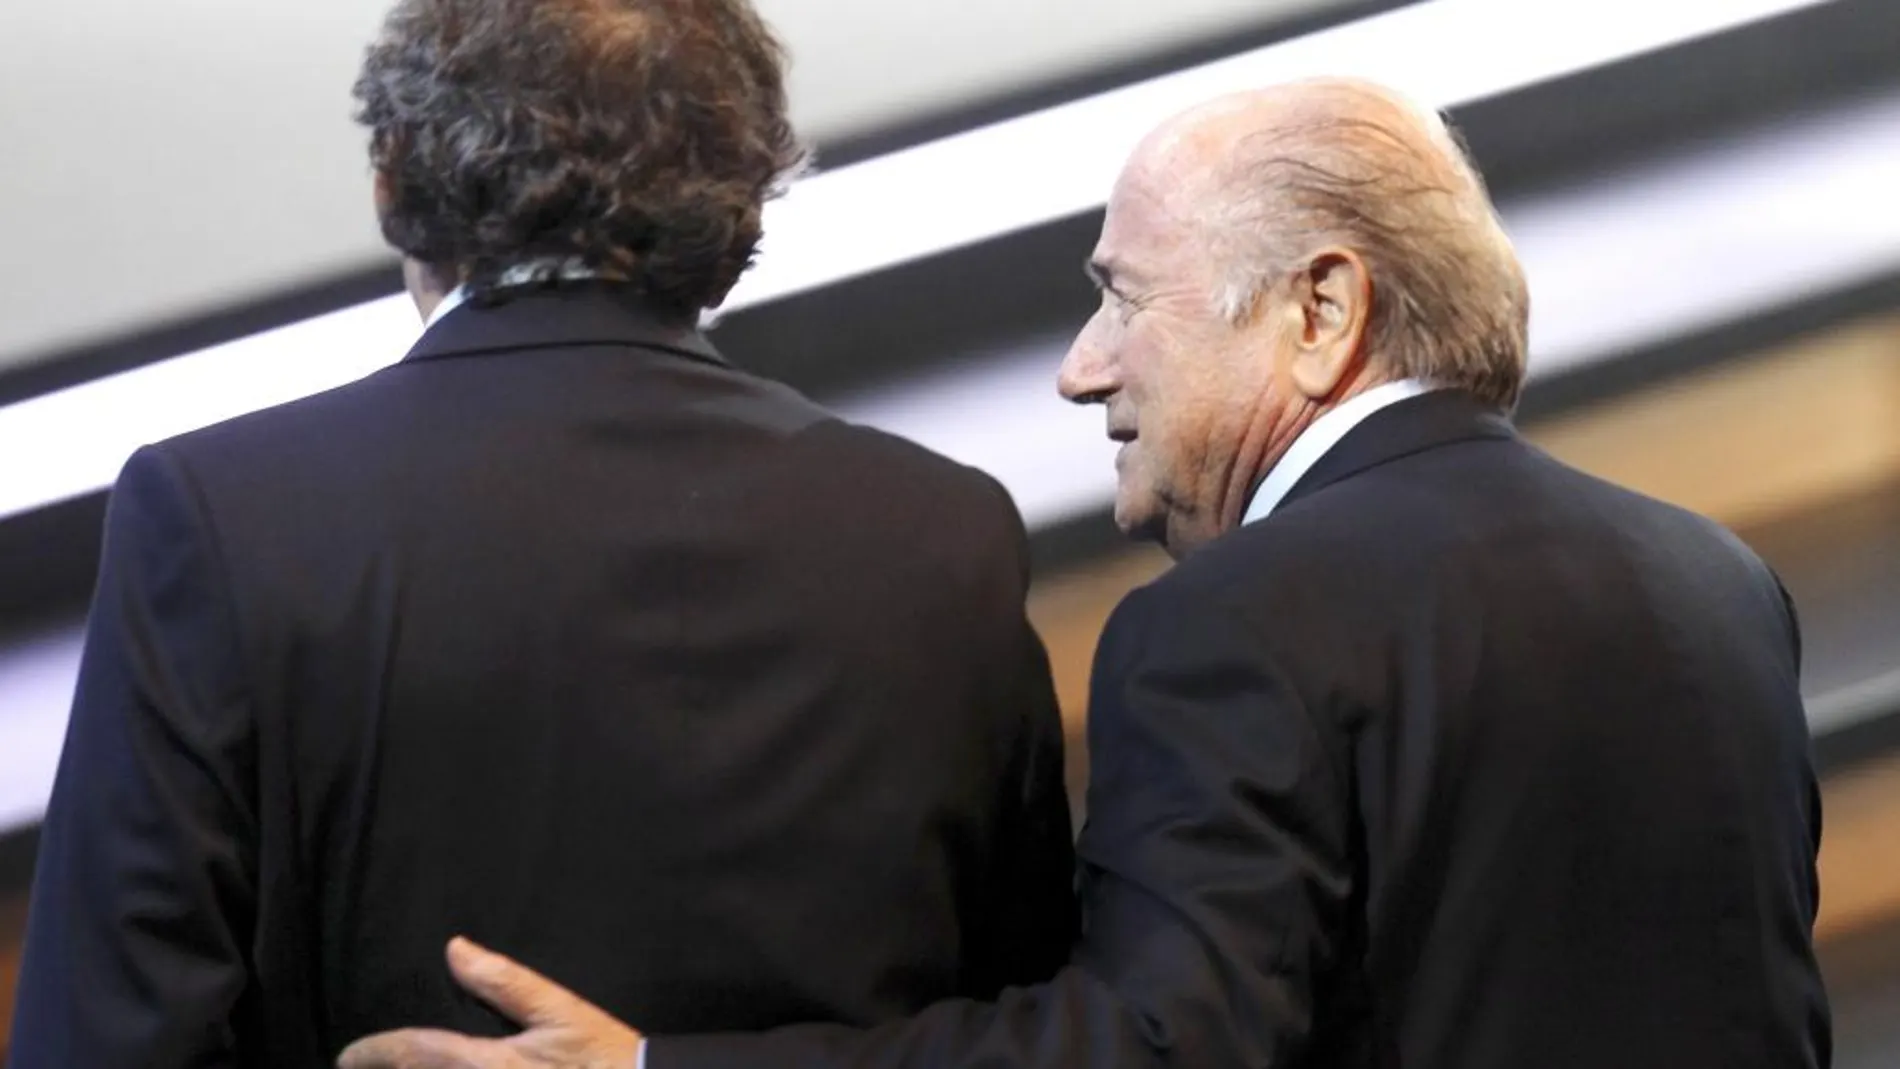 Michel Platini y Blatter